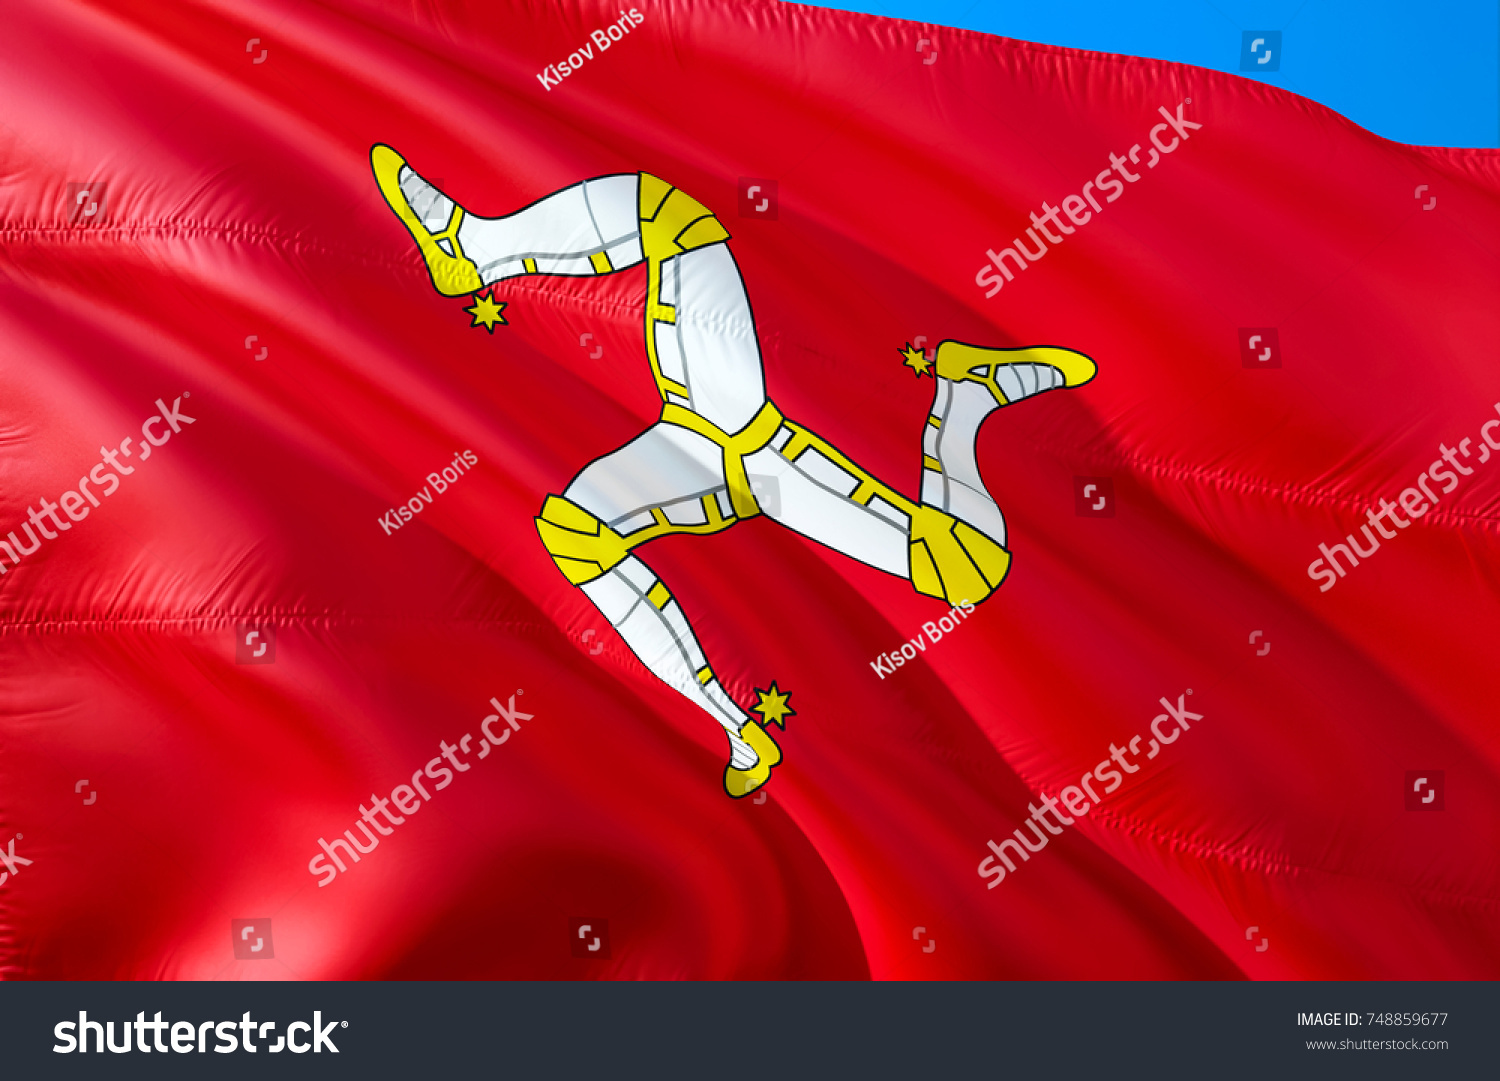 Royalty Free Stock Illustration of Isle Man Flag Flag Isle Man